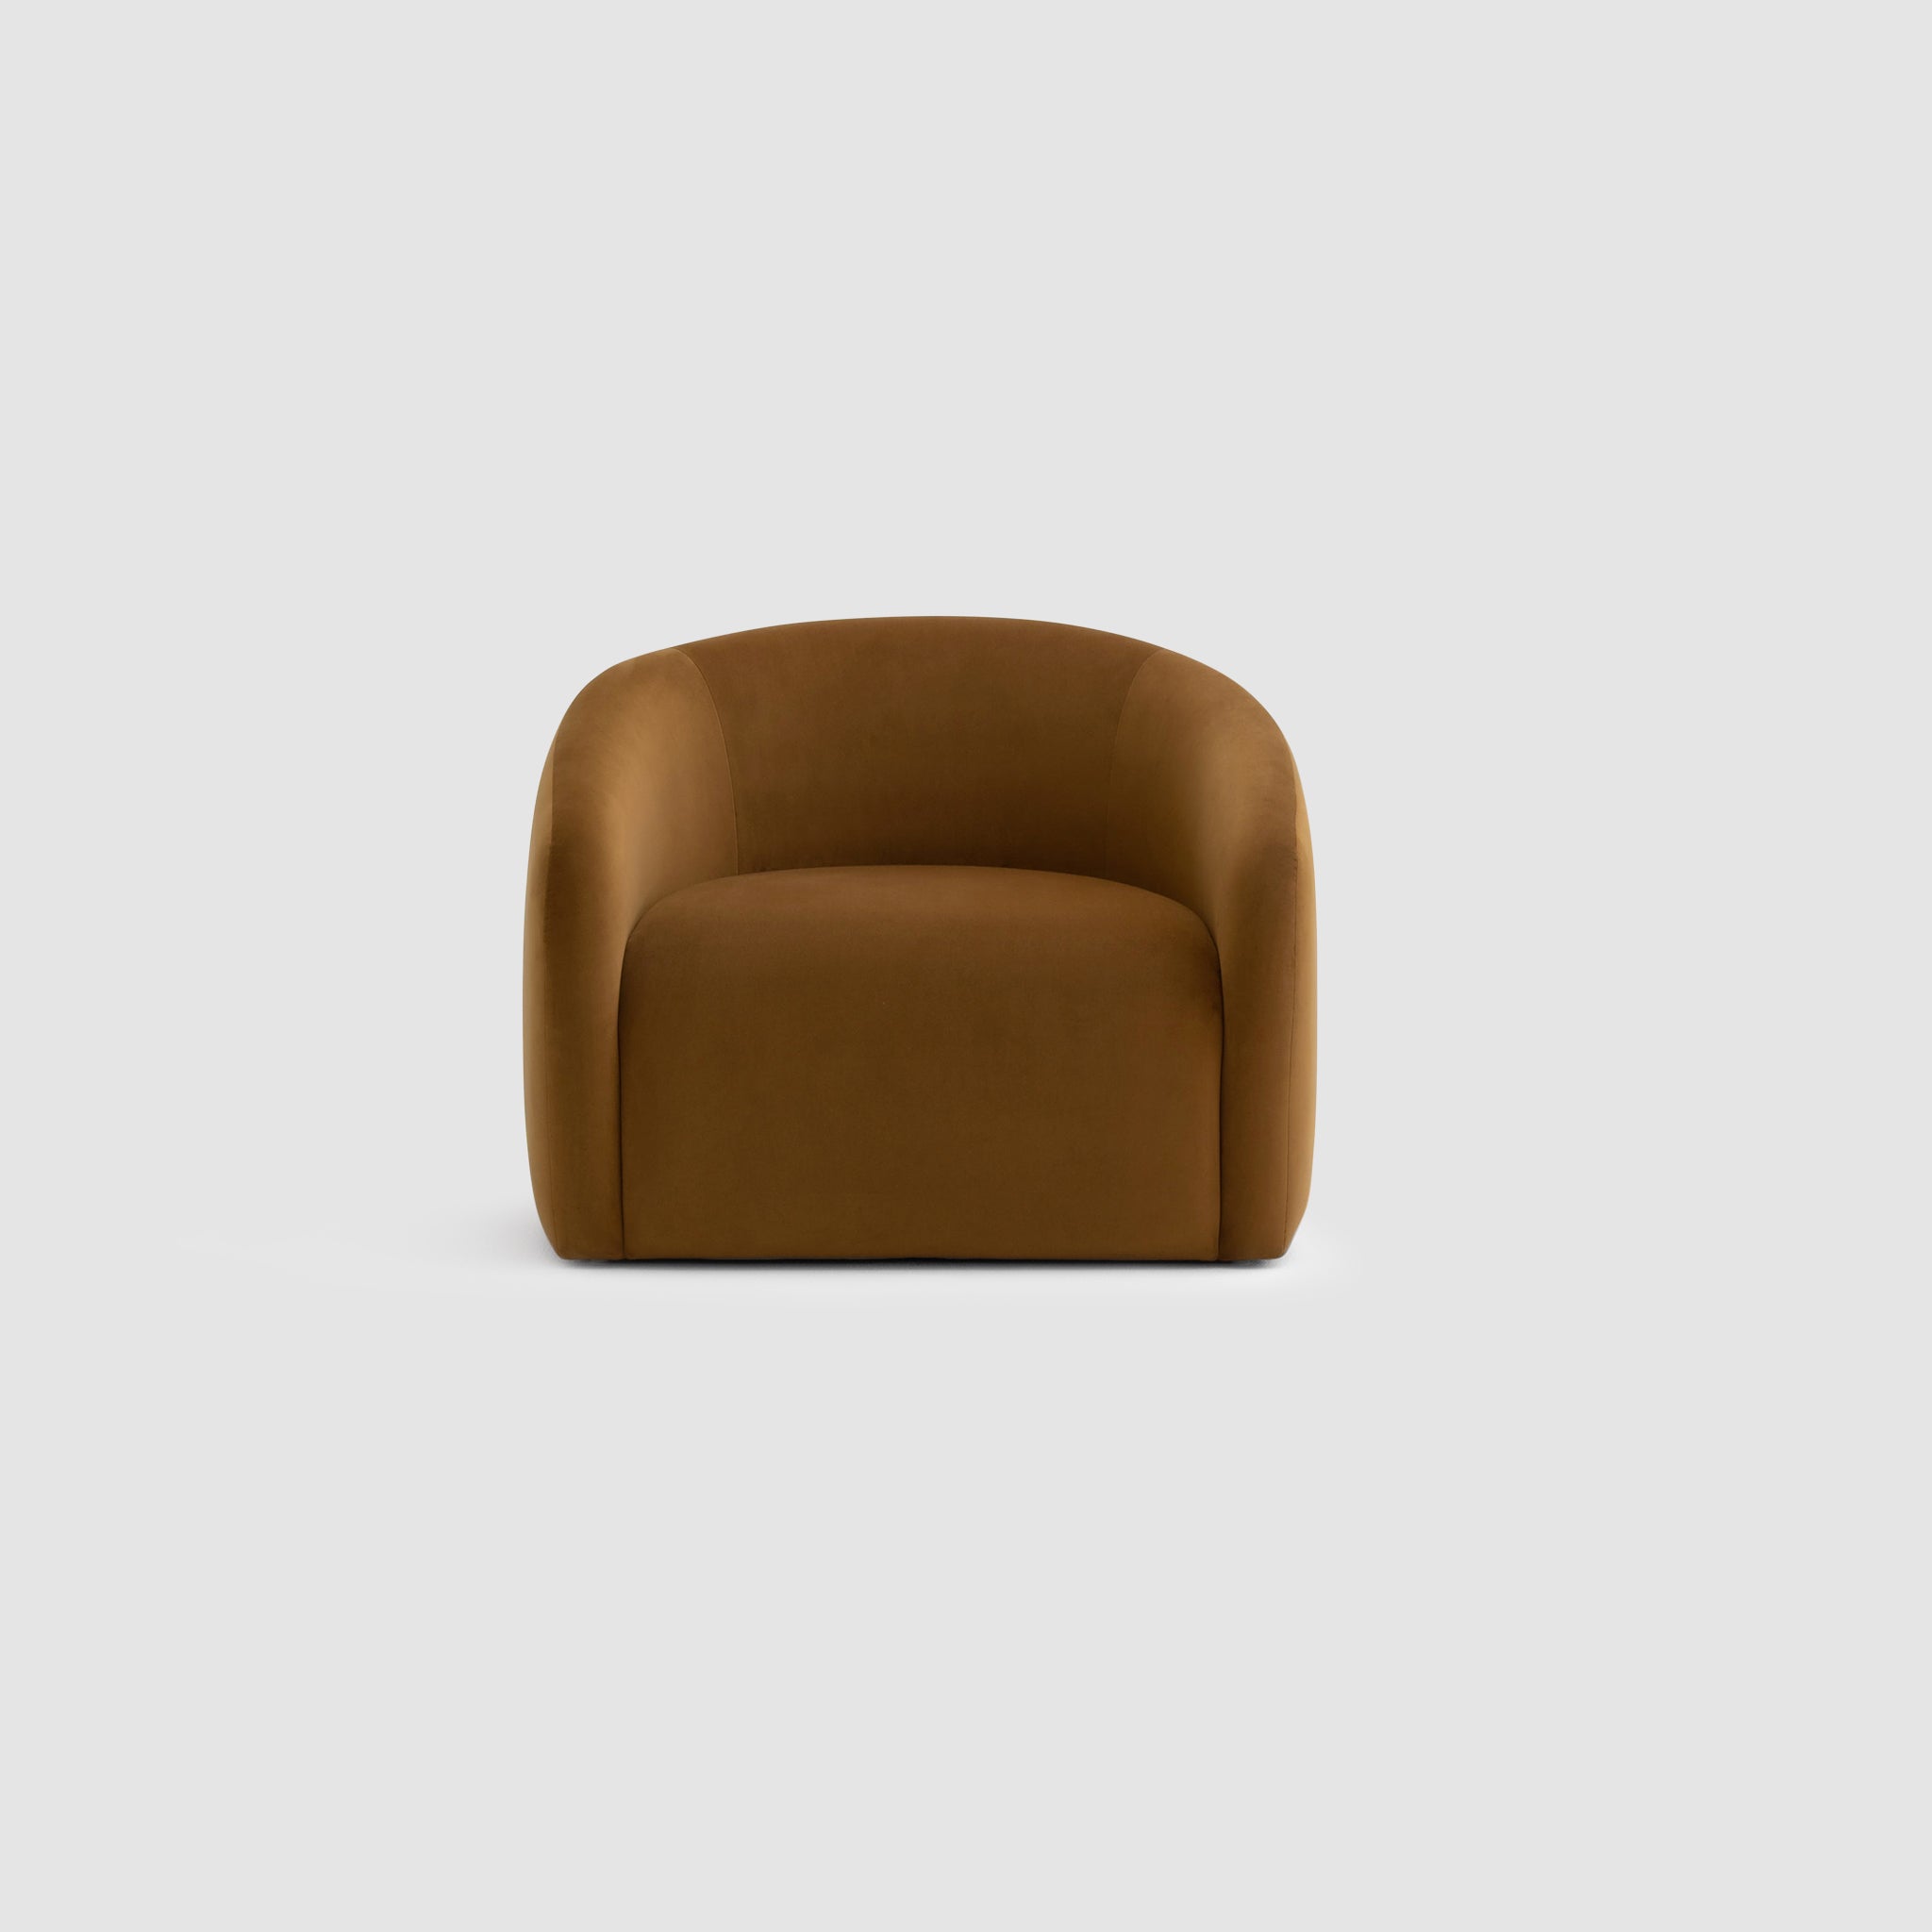 Modern brown swivel club chair on a white background